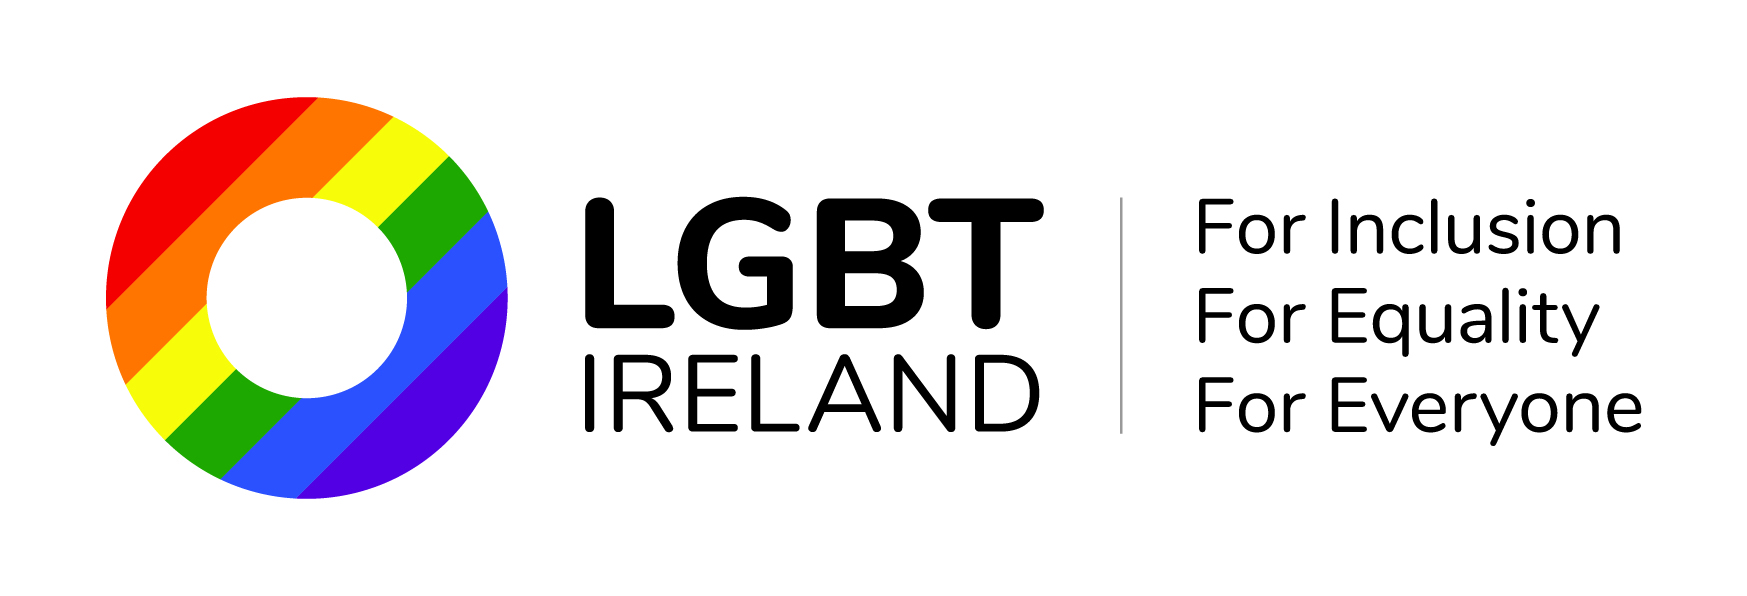 LGBT Ireland